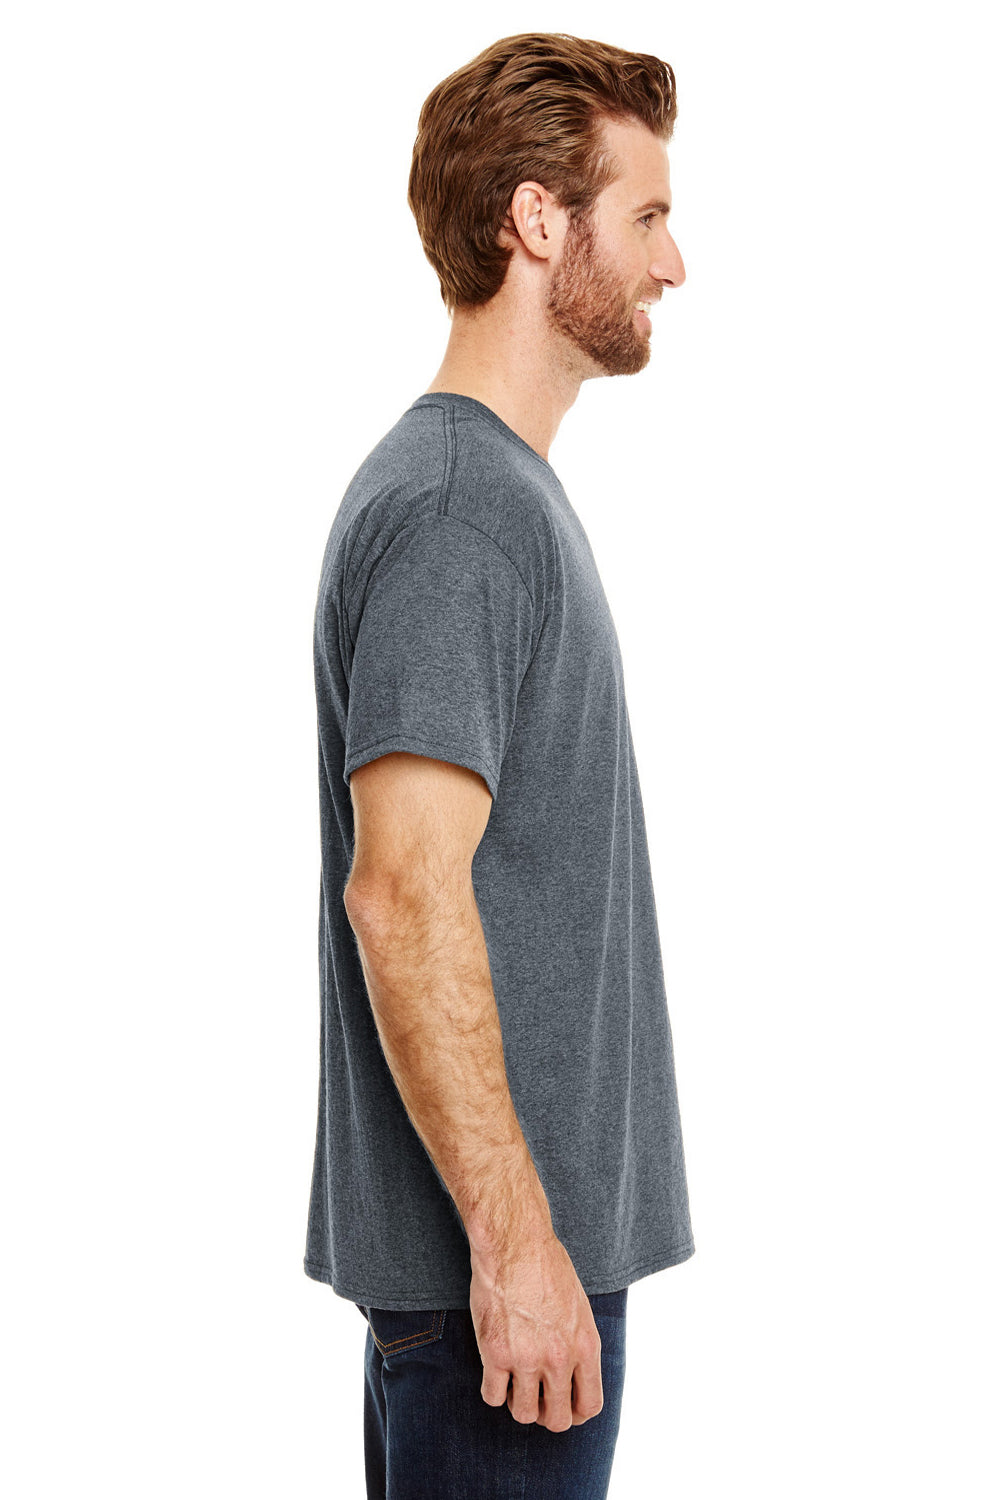 Hanes 42TB Mens X-Temp FreshIQ Moisture Wicking Short Sleeve Crewneck T-Shirt Slate Grey Side